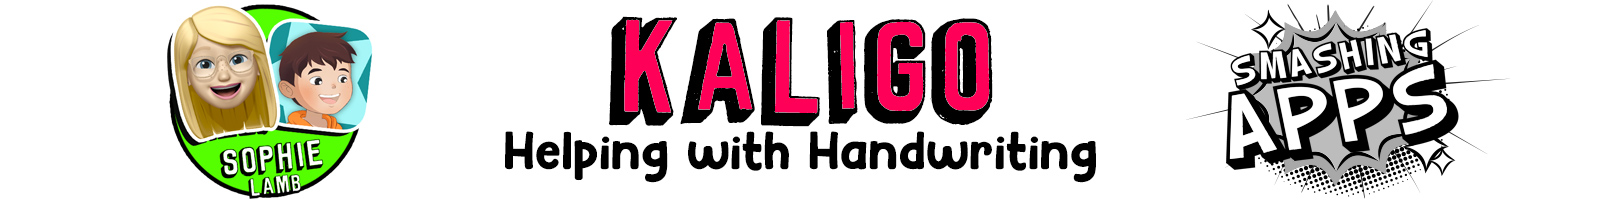 Subheading: Kaligo - Helping with Handwriting